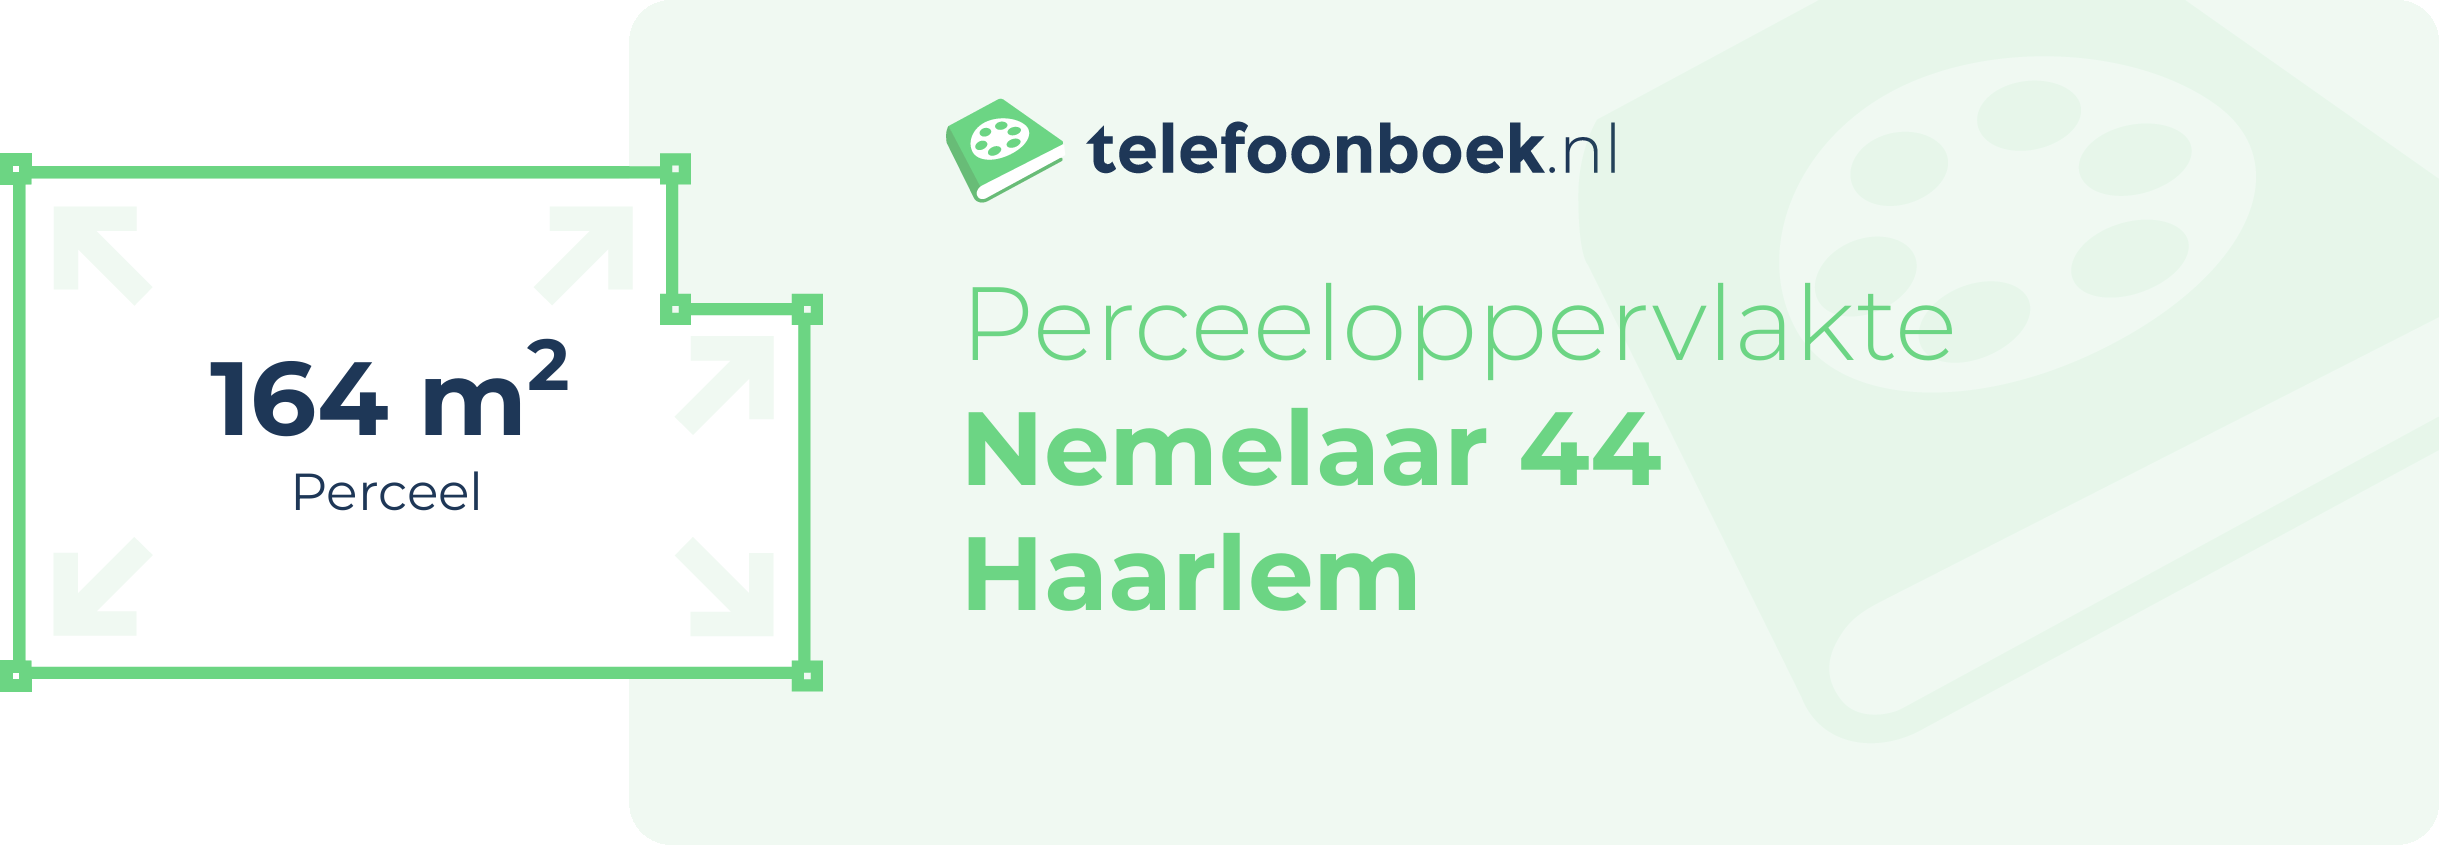 Perceeloppervlakte Nemelaar 44 Haarlem